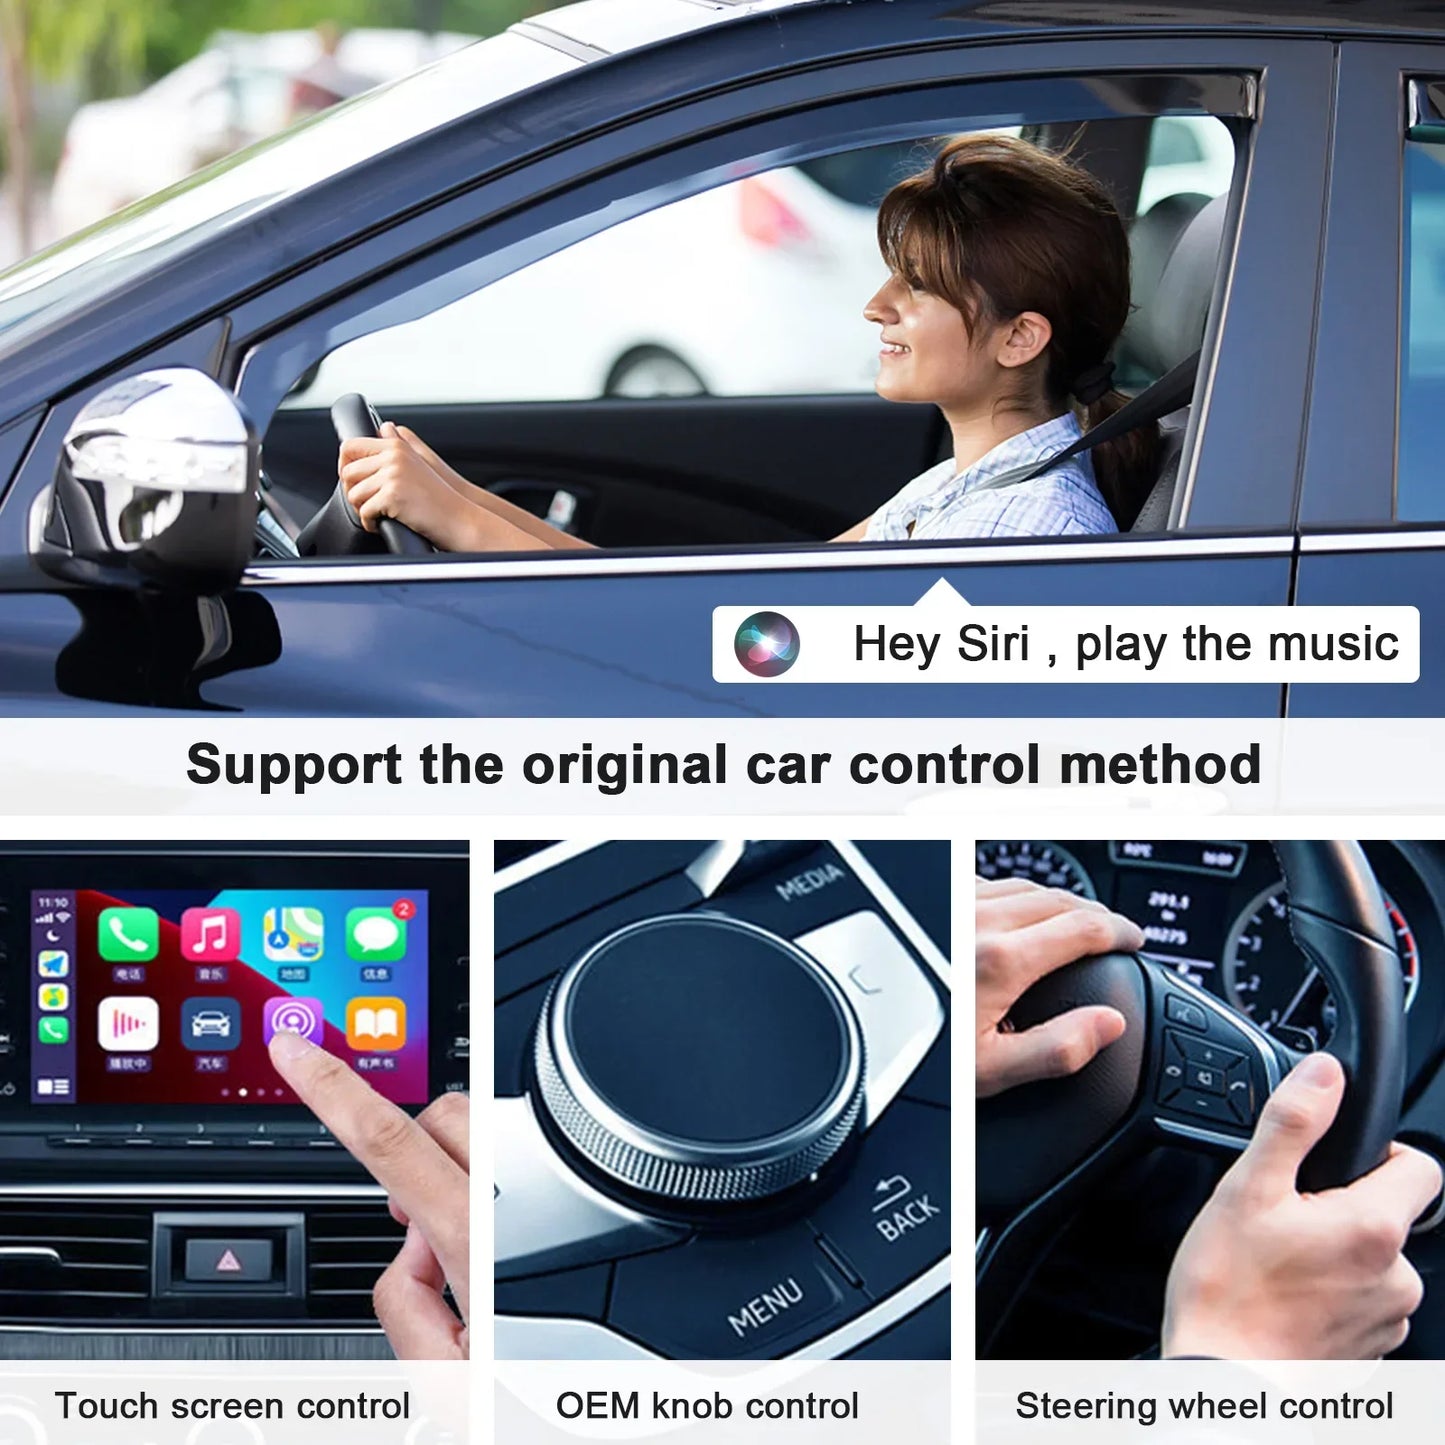 New Wireless Auto Car Adapter,Apple Wireless Carplay Dongle,Plug Play